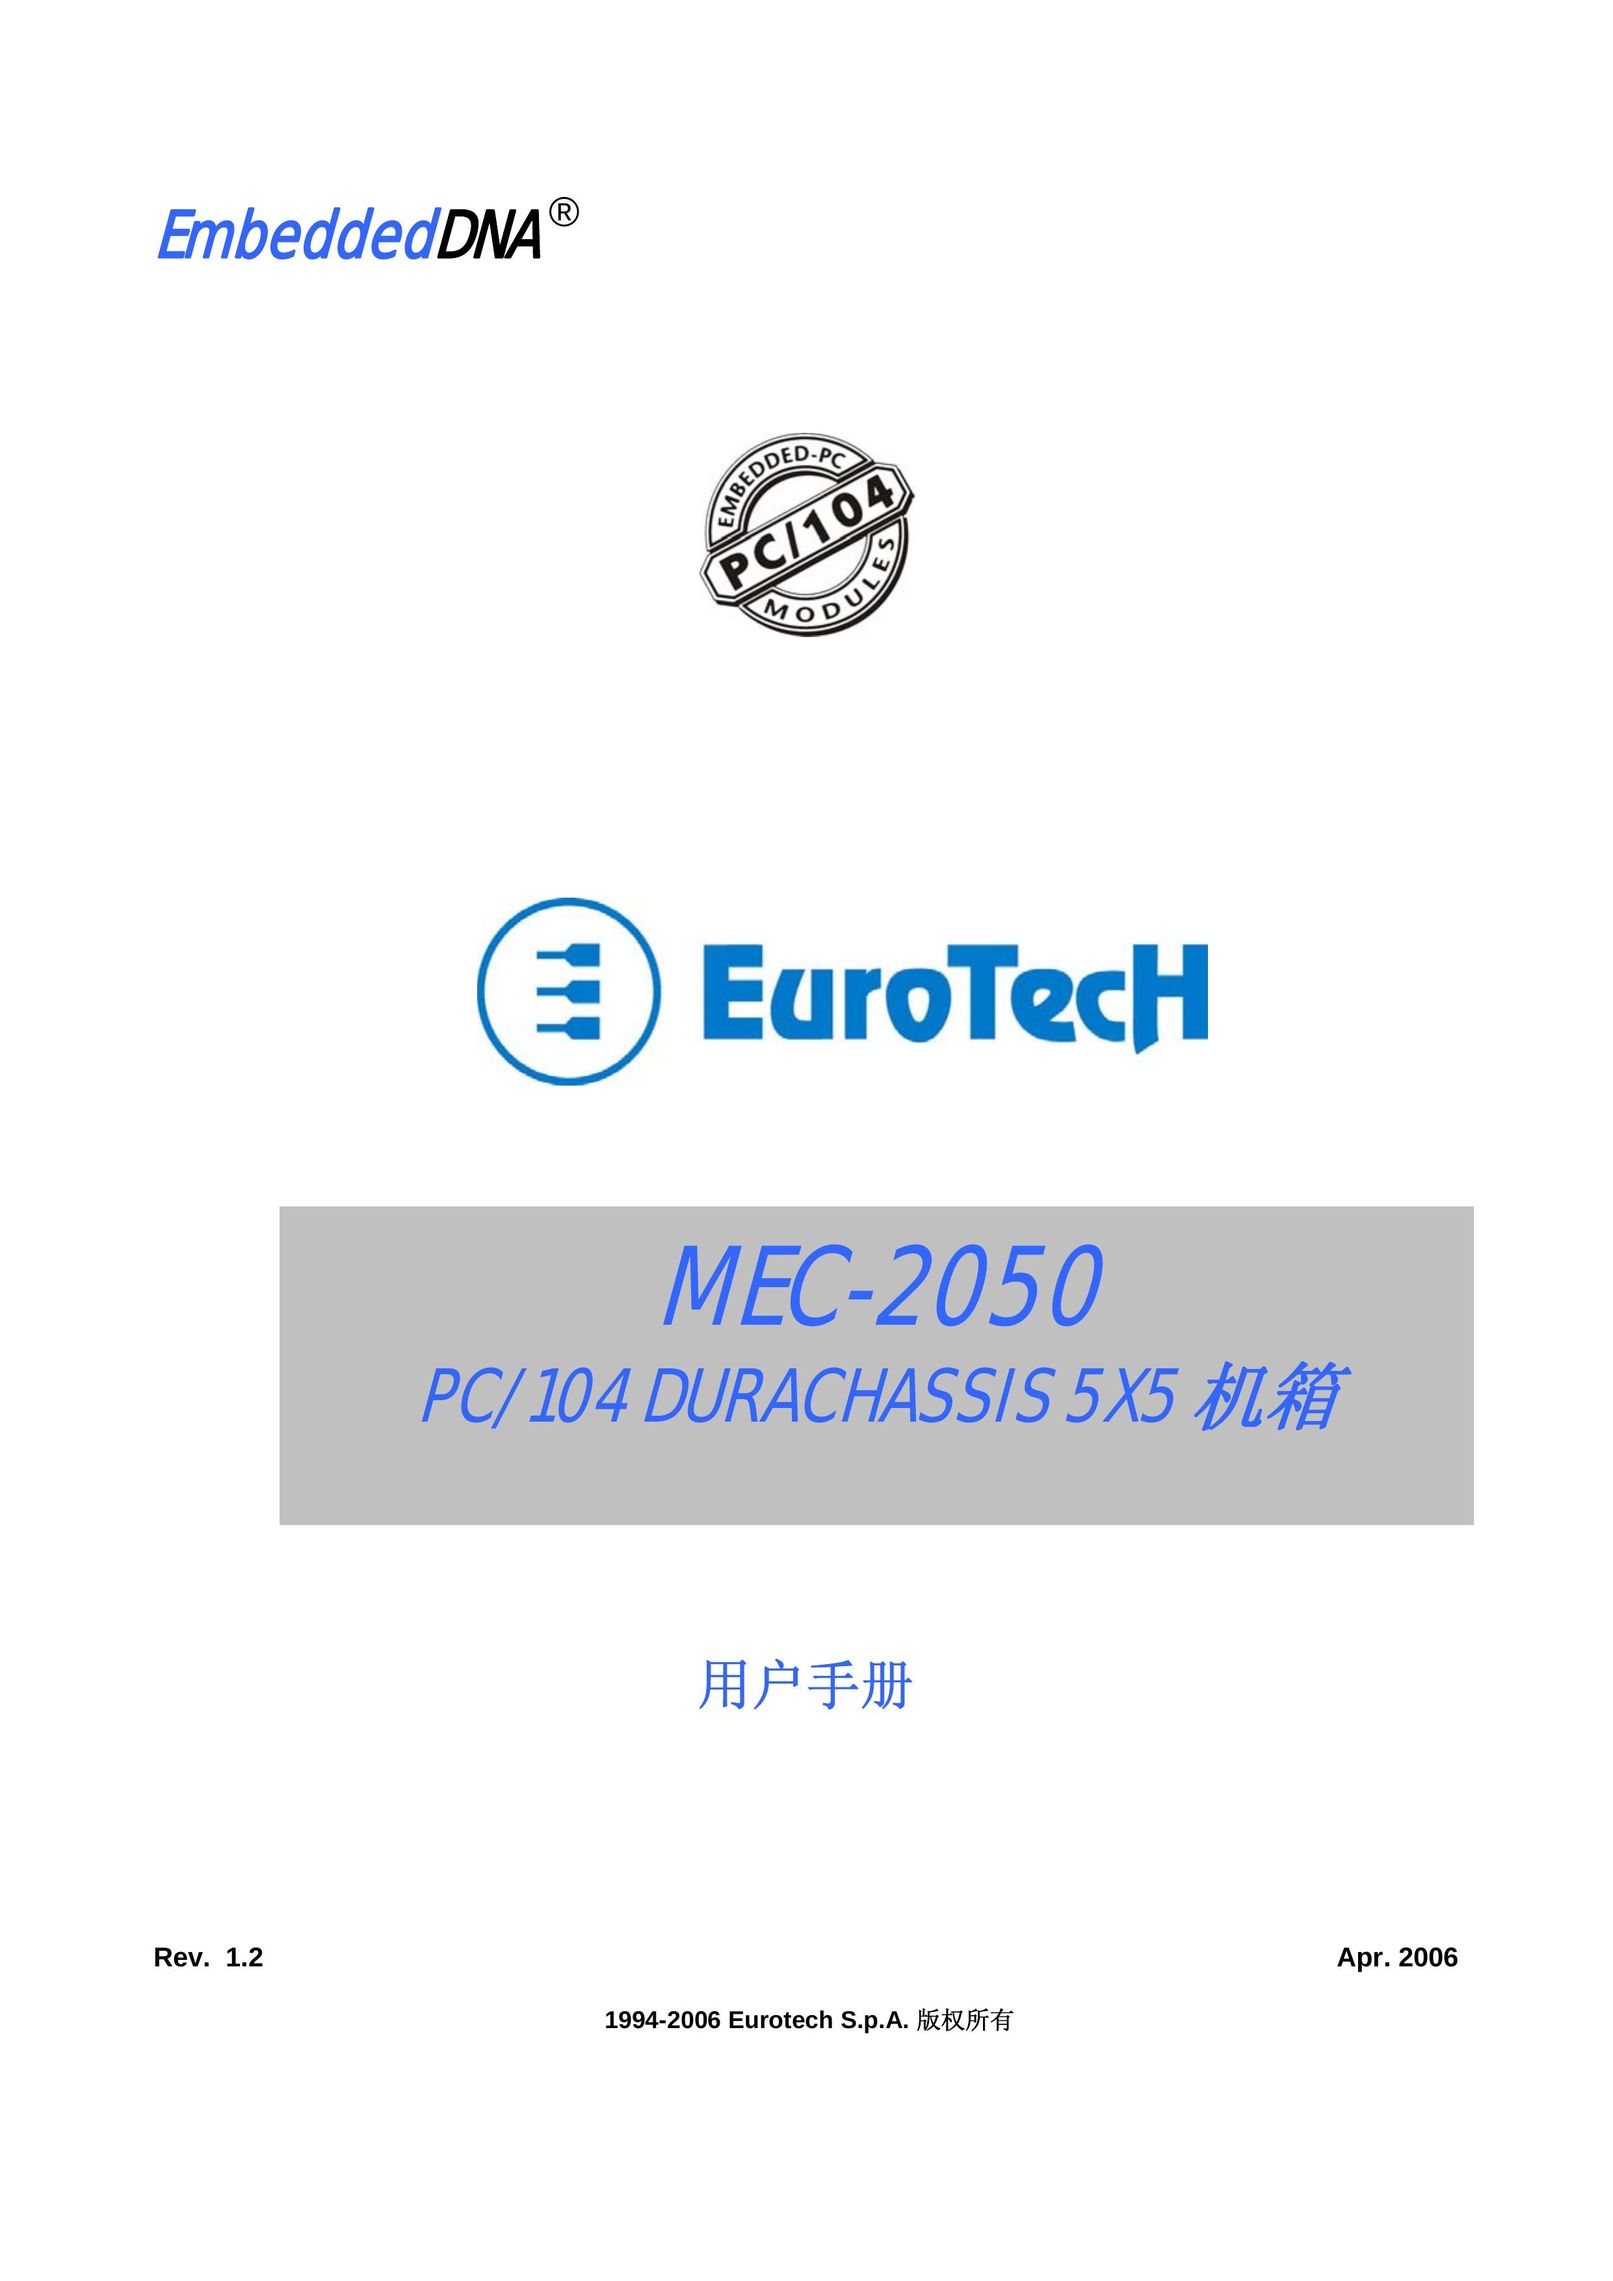 Eurotech Appliances MEC-2050 Computer Hardware User Manual